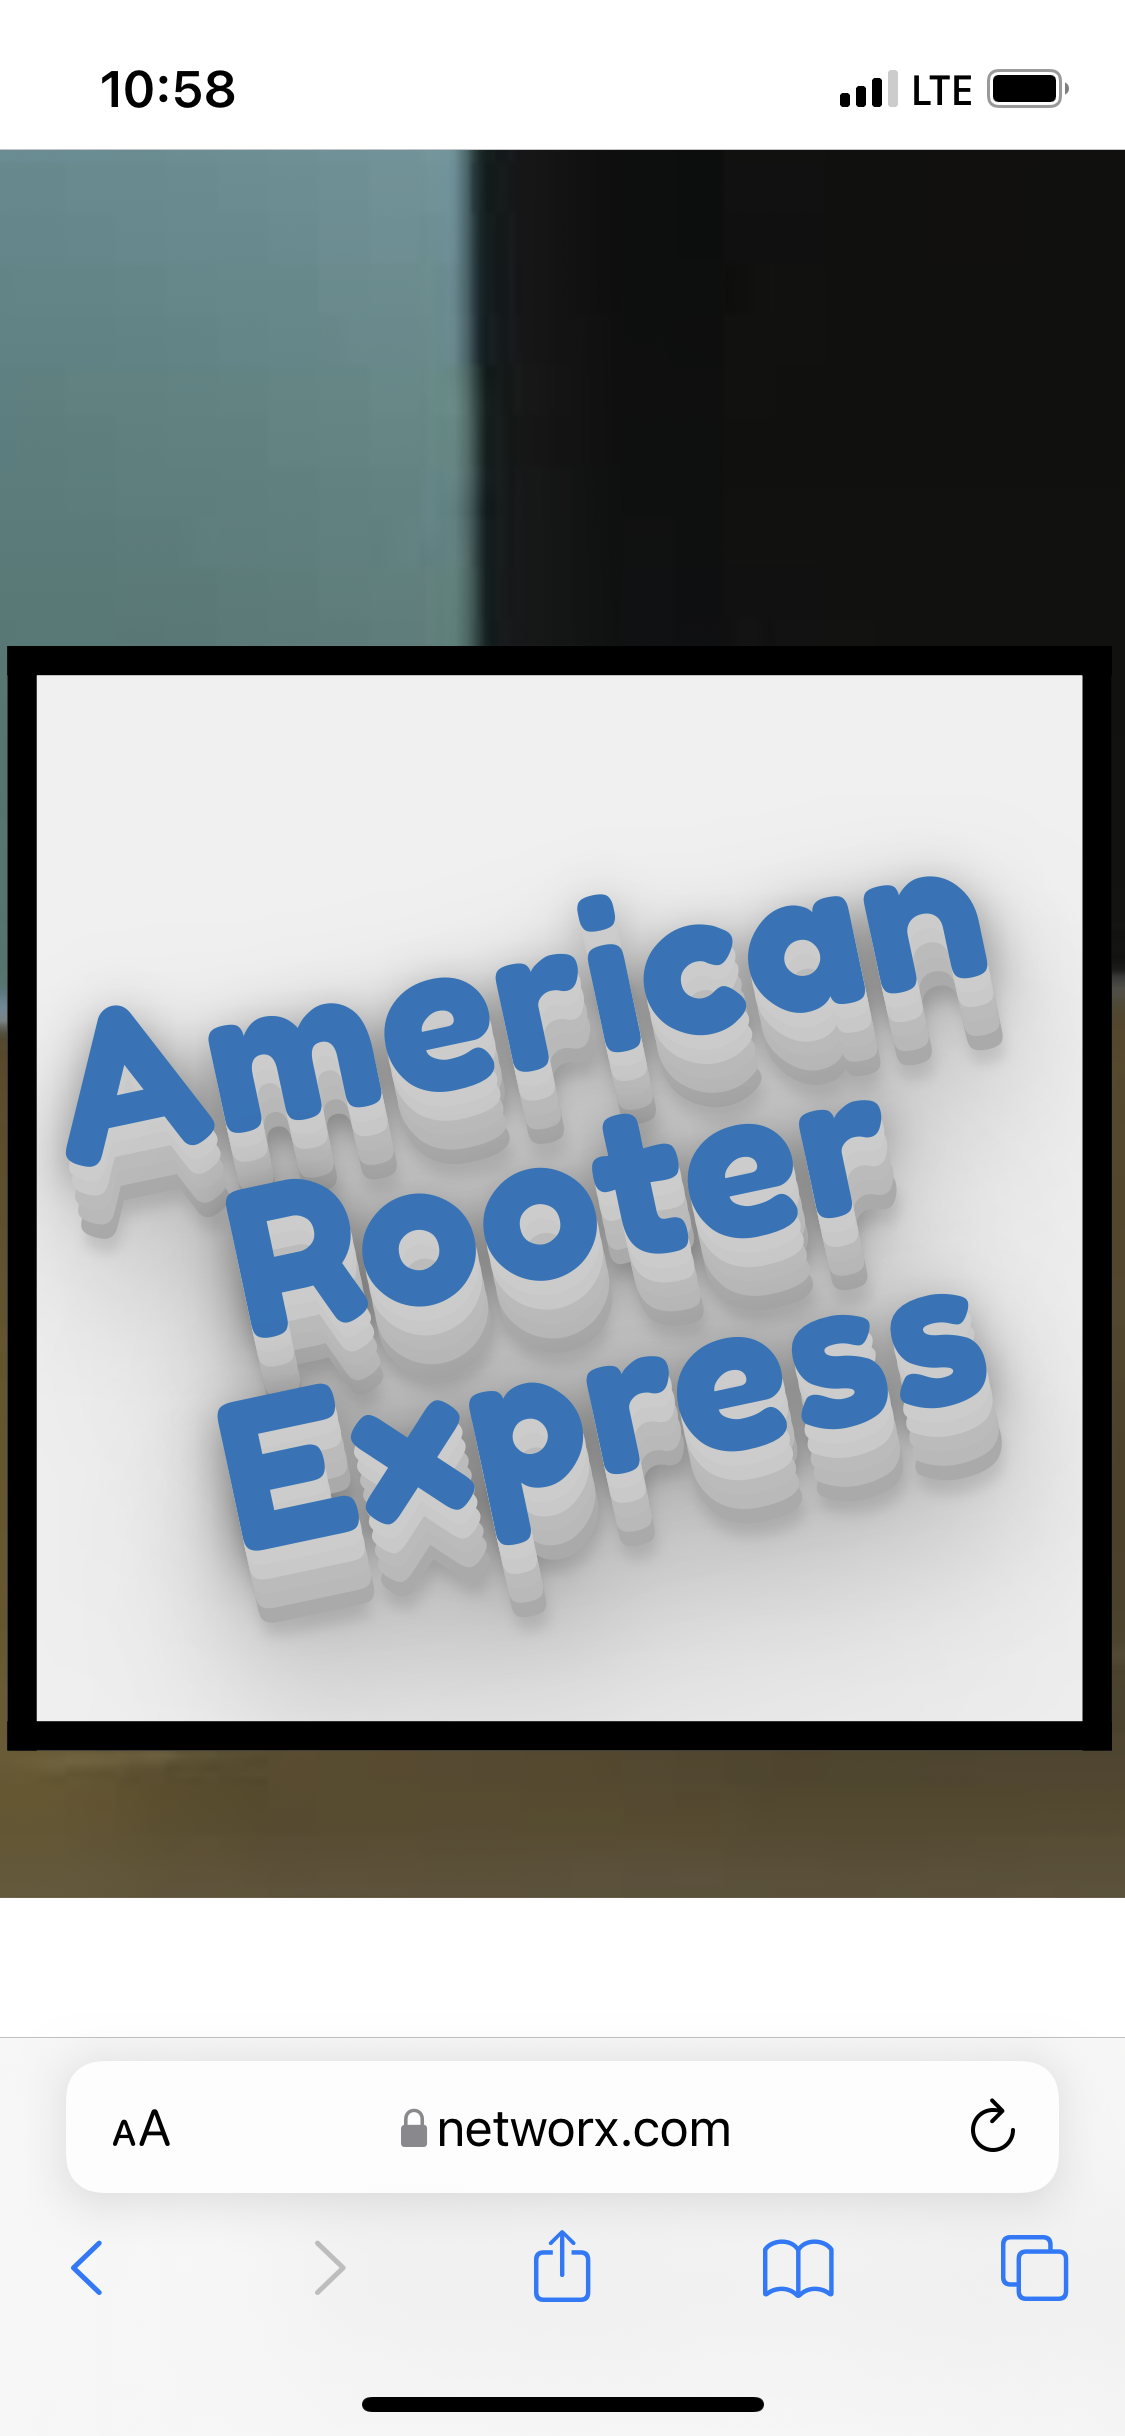 A.R.E. American Rooter Express Logo